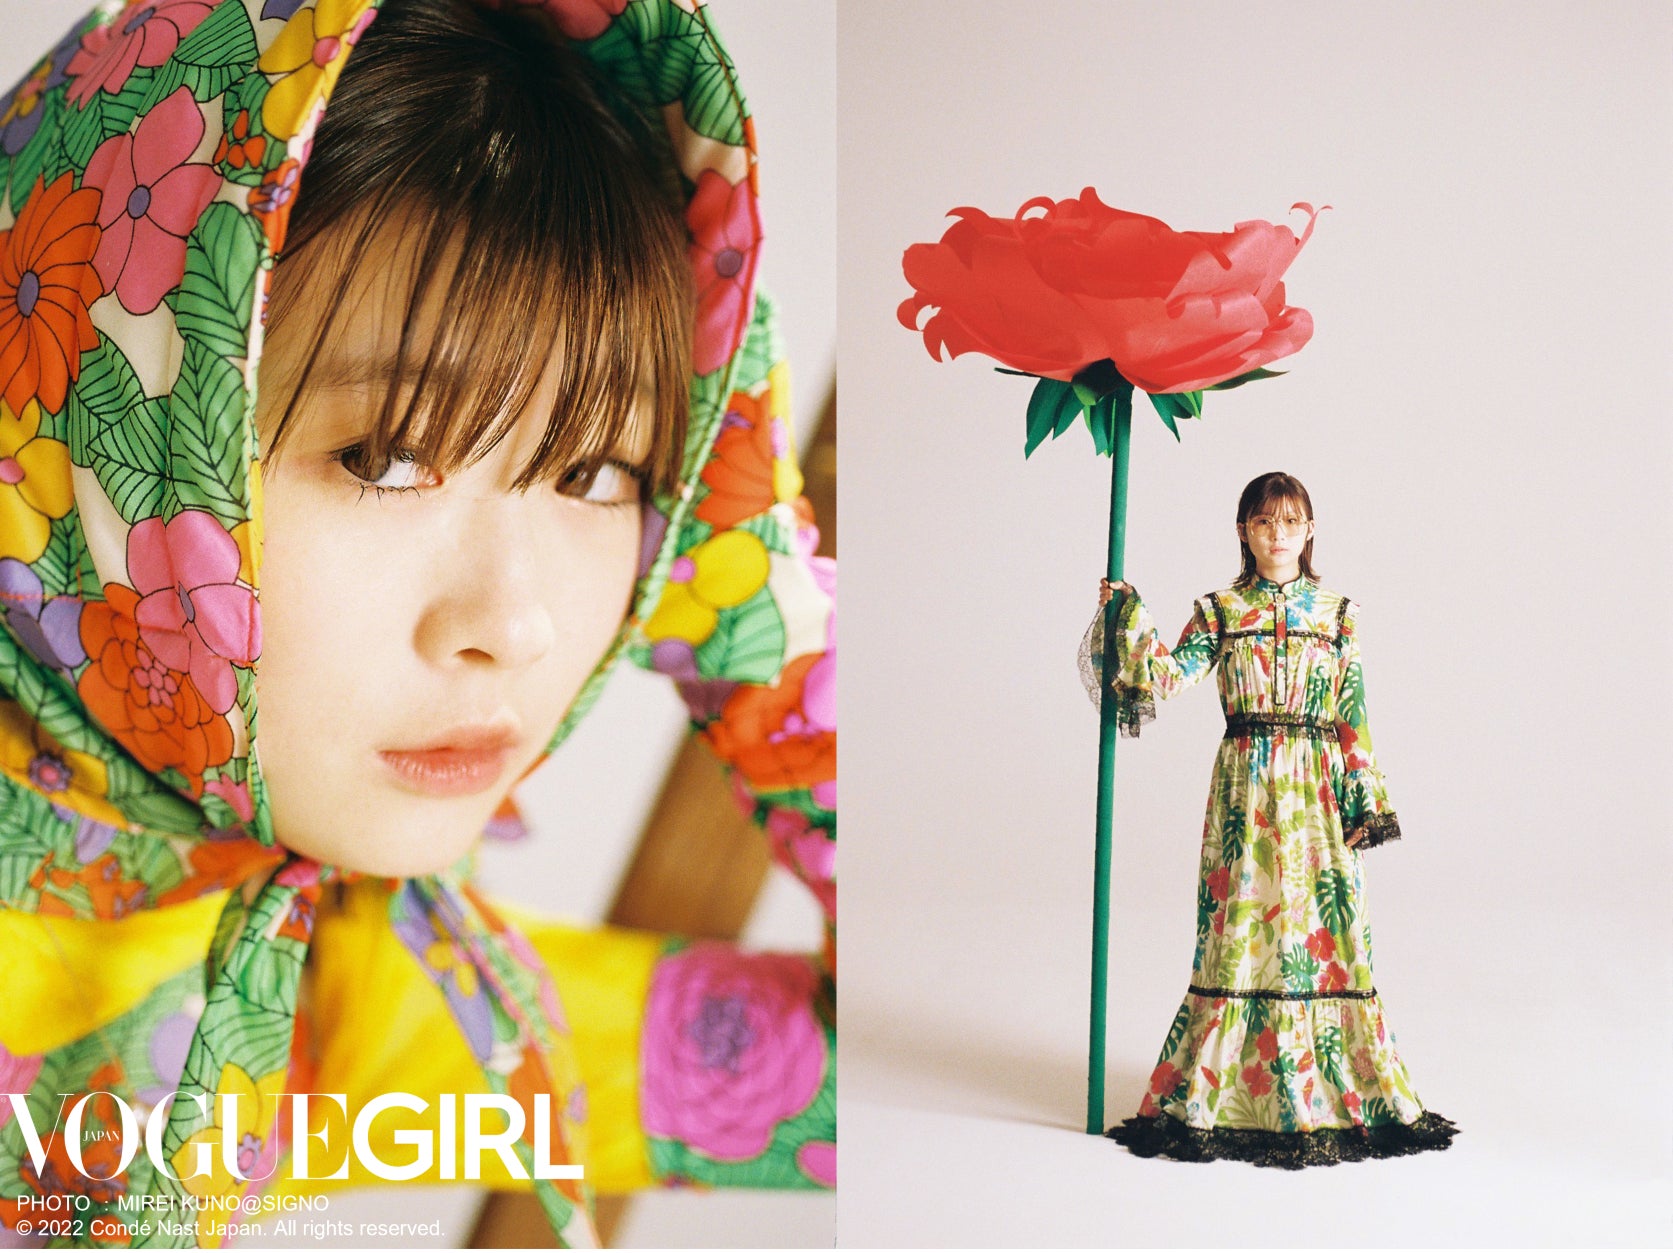 『VOGUE GIRL』の人気企画「GIRL OF THE MONTH」に伊藤沙莉が登場！自分の個性を初夏のフラワーに重ね、カラフルでハッピーな世界を表現。